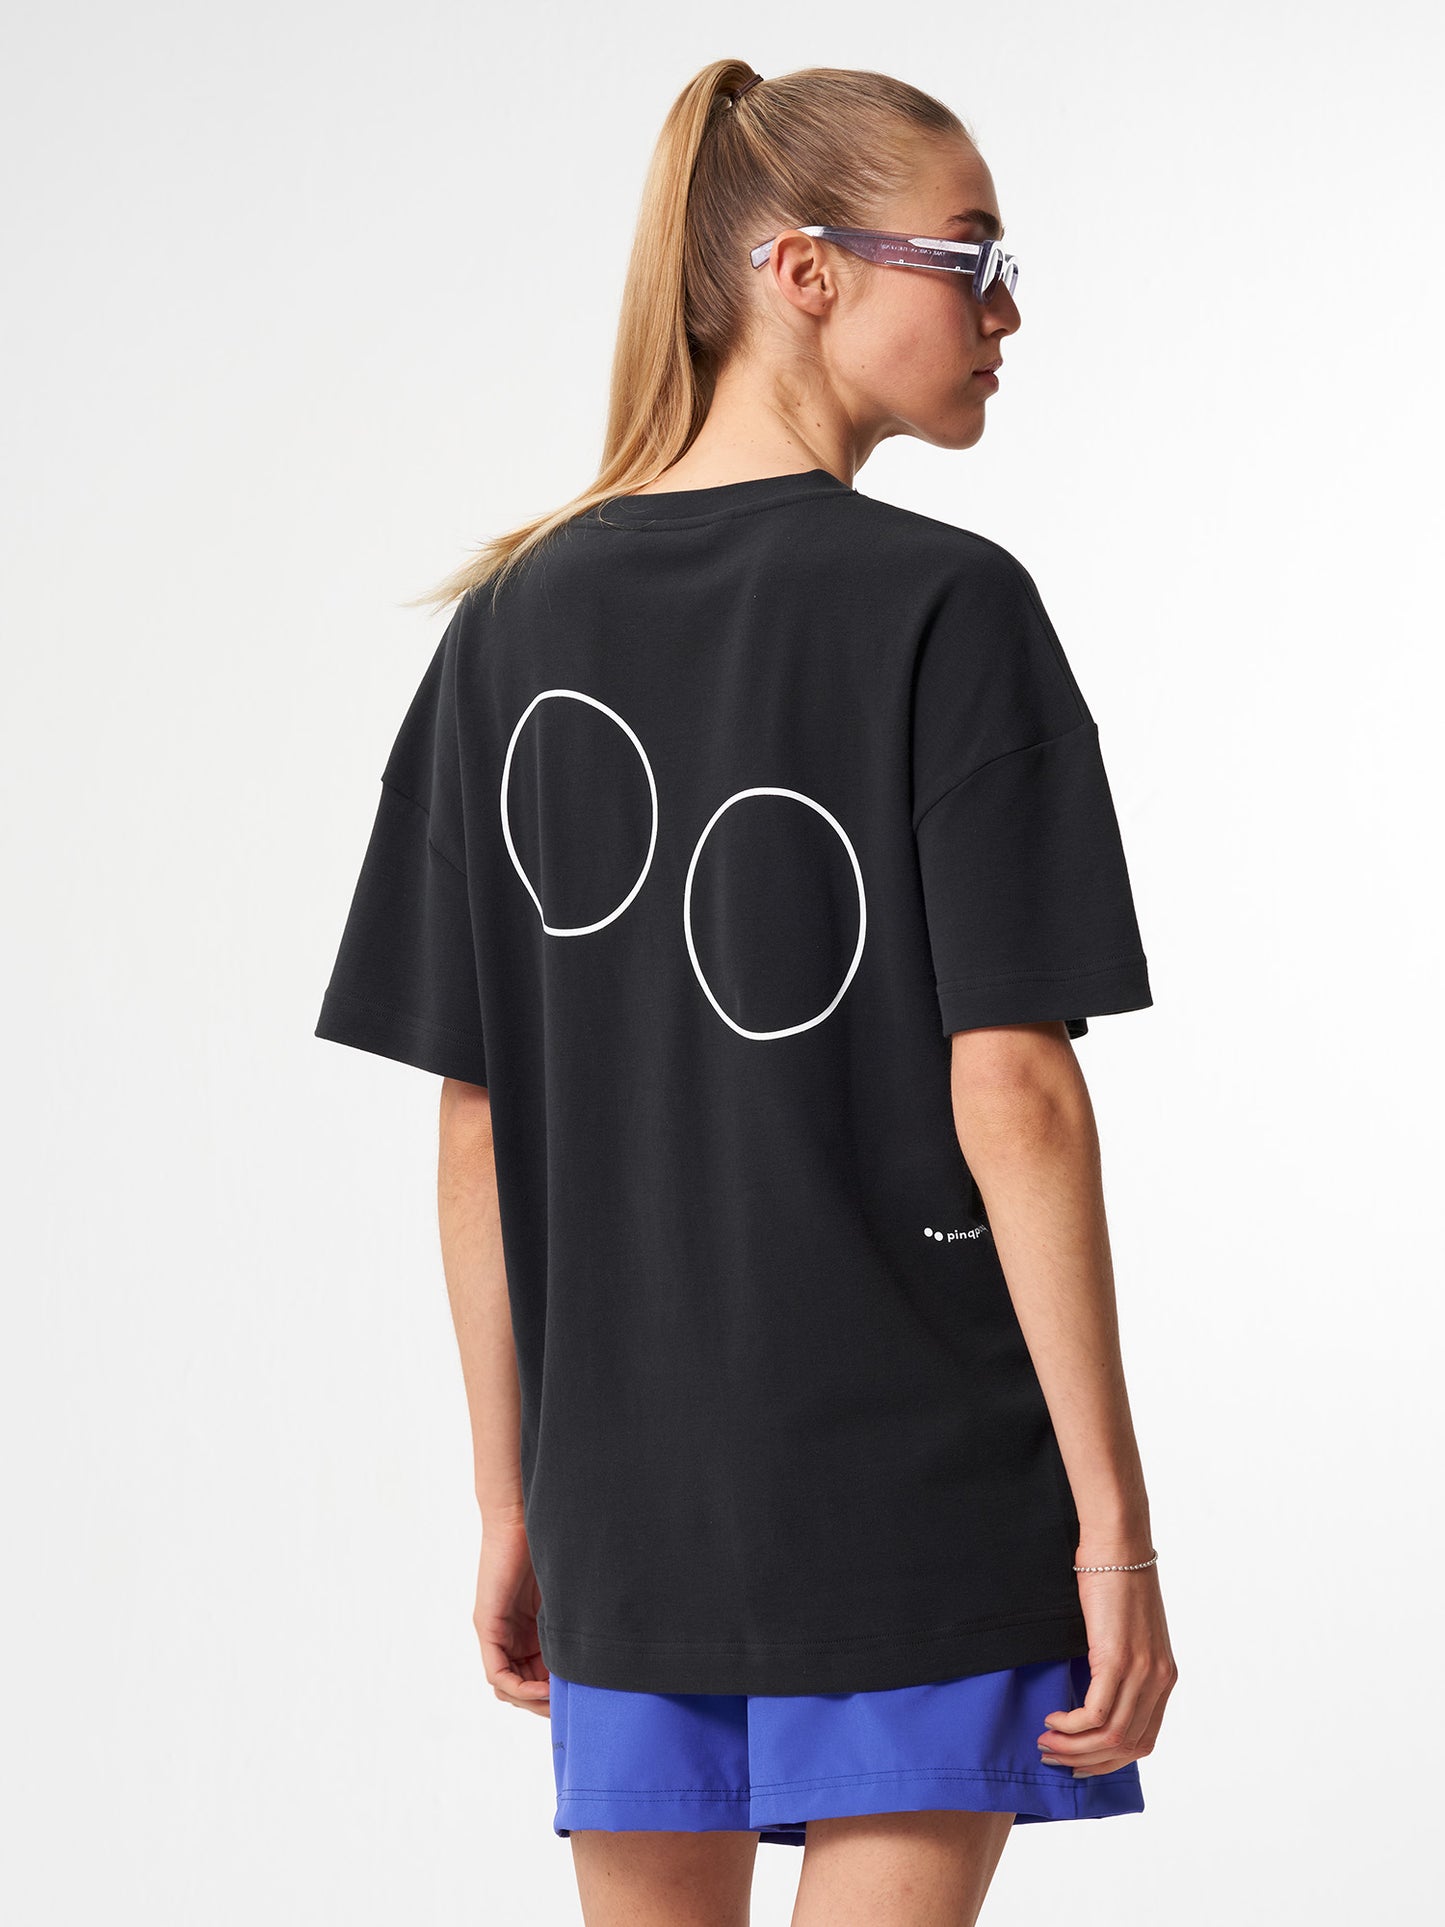 pinqponq-Tshirt-Unisex-Circles-Peat-Black-model-back